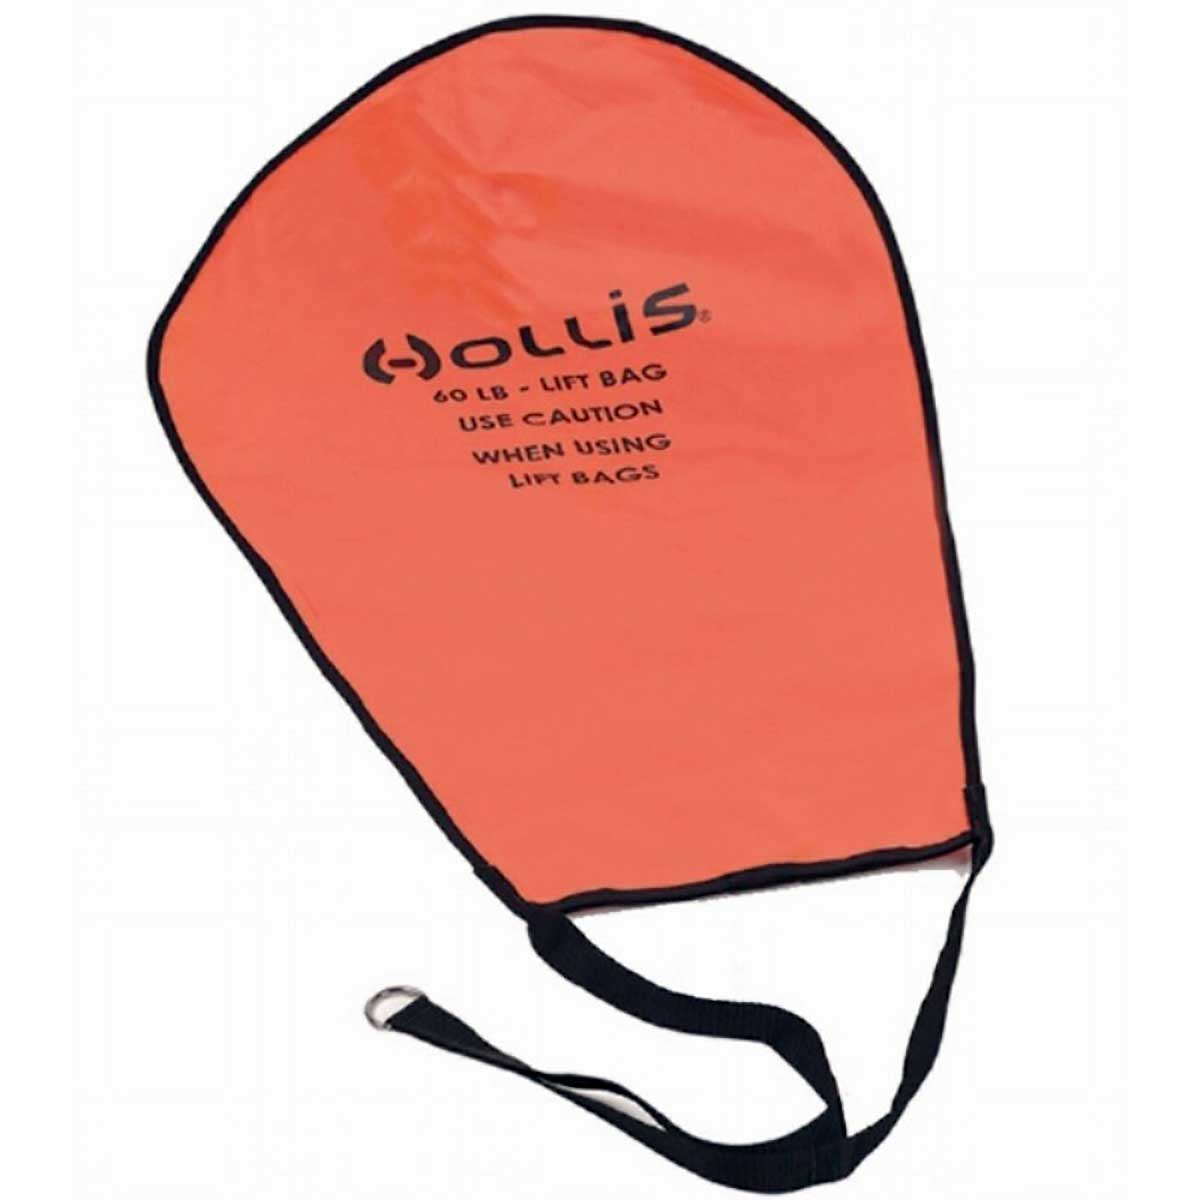 Hollis 125lb Lift Orange Bag - DIPNDIVE